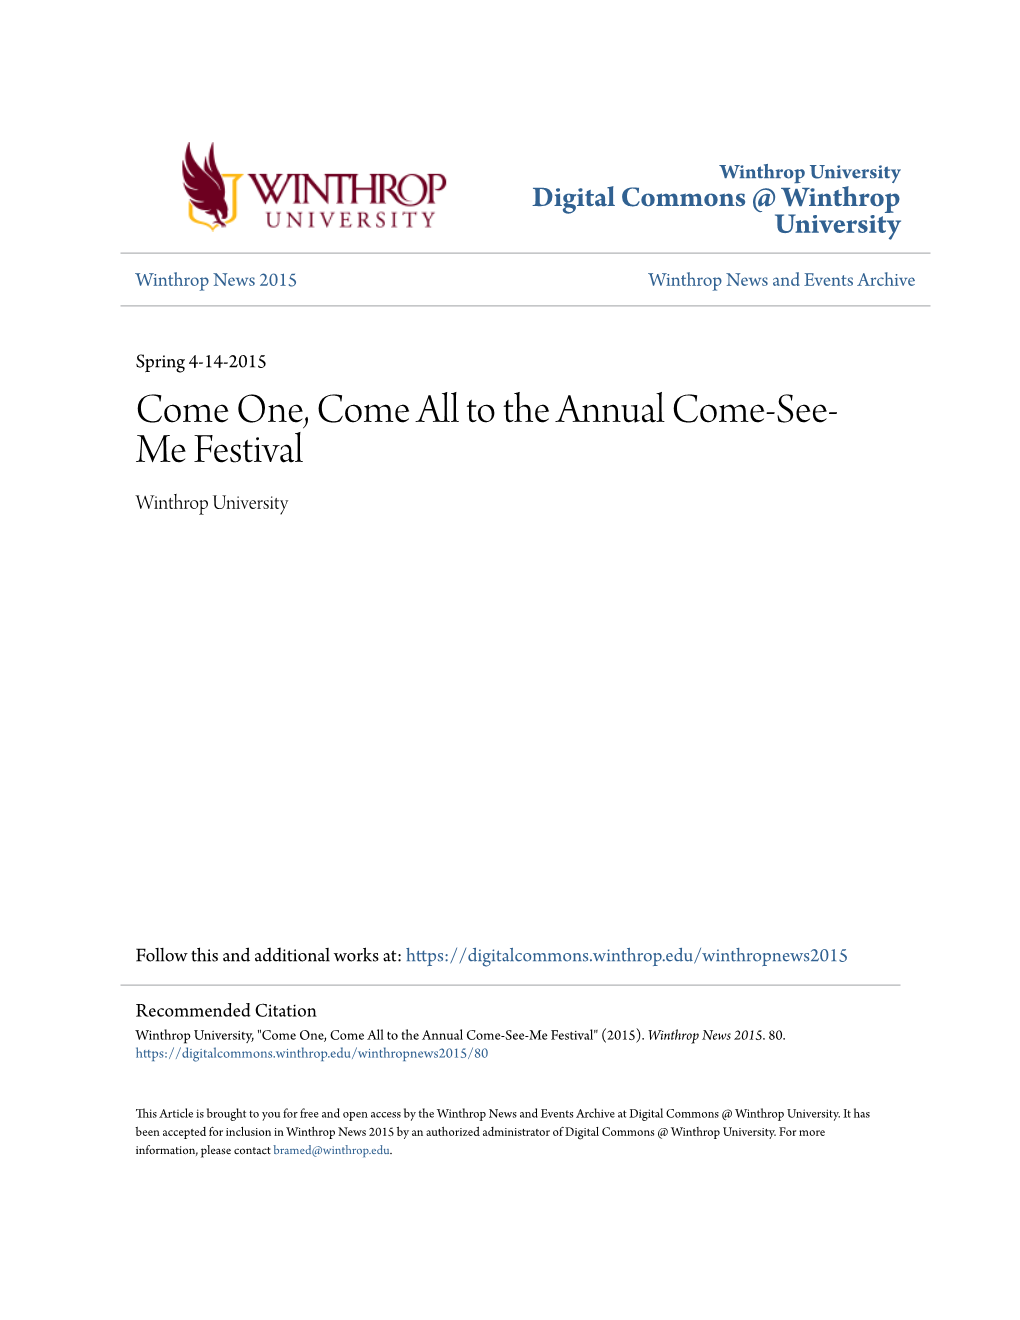 Come One, Come All to the Annual Come-See-Me Festival" (2015)